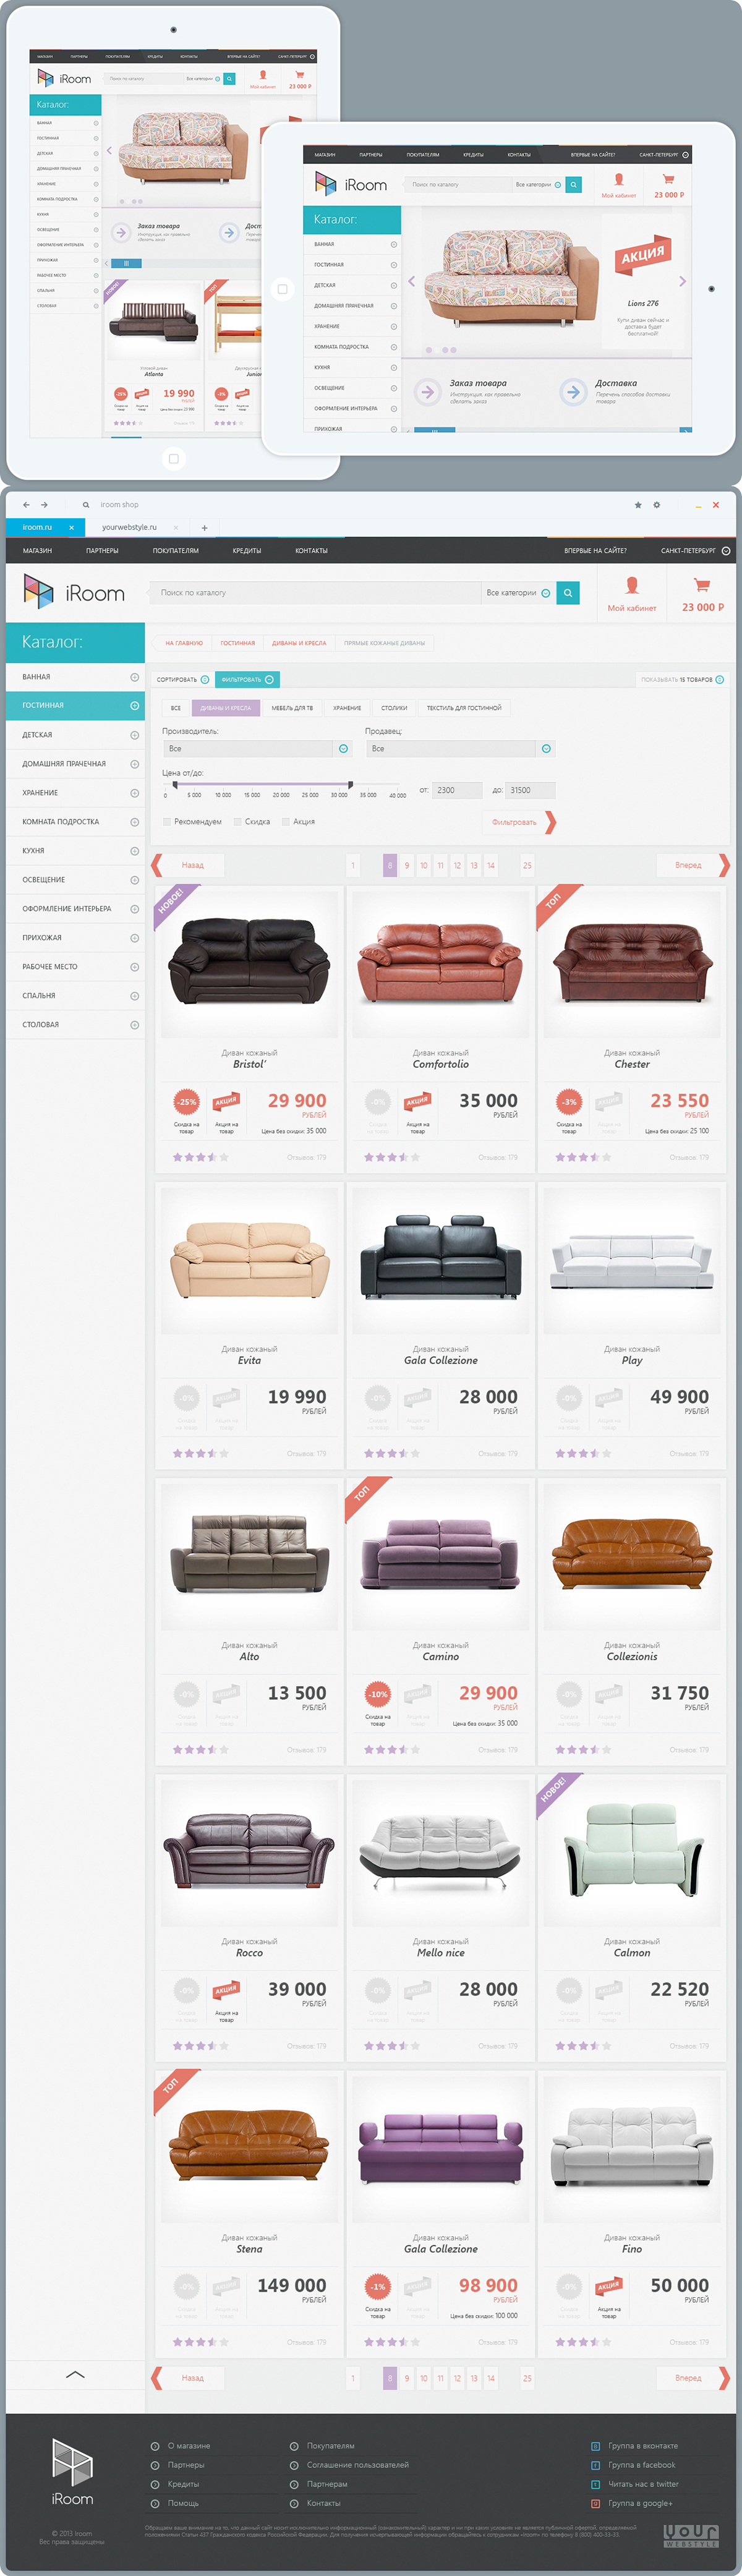 shop online furniture goods home Website blocks content logo room Internet access UI metro ui